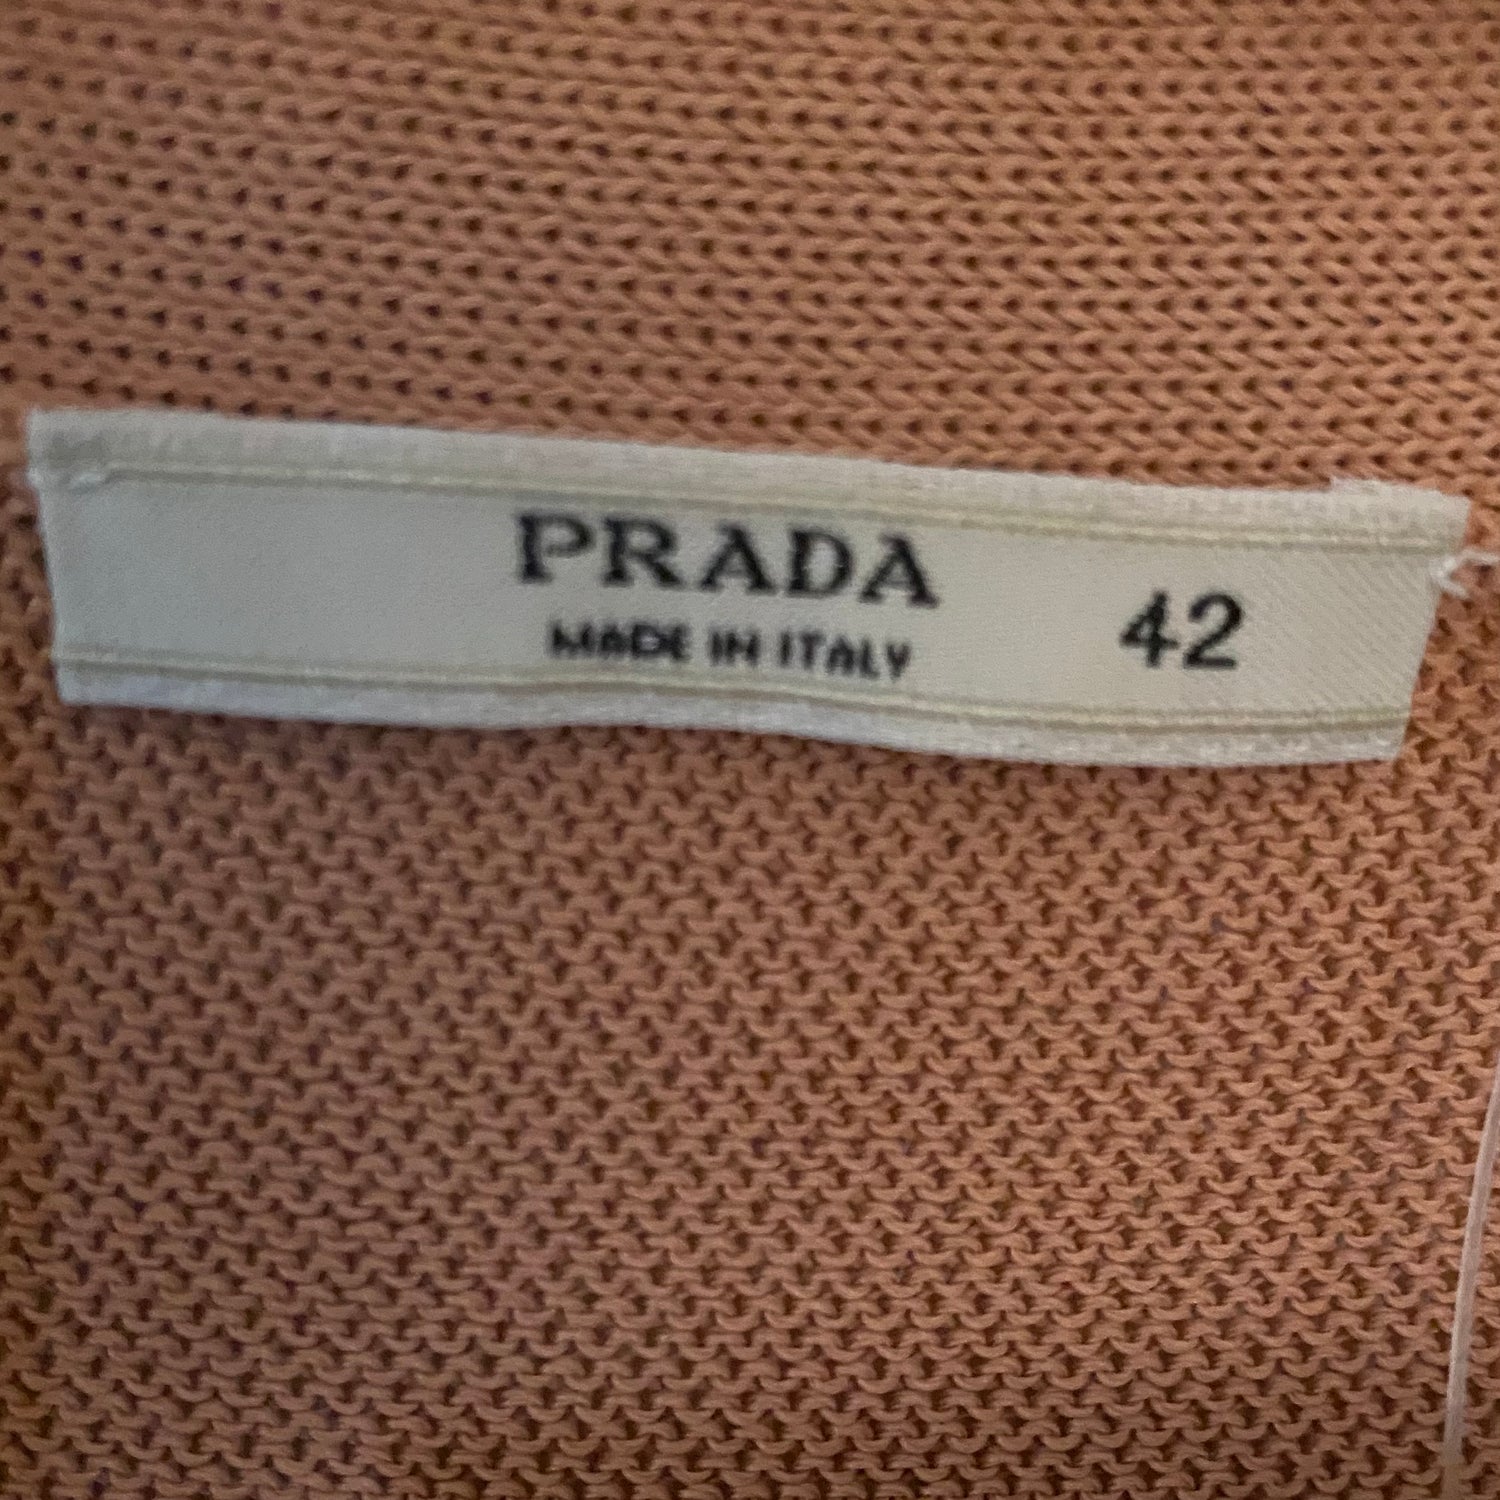 PRADA Knitwear vintage Lysis Paris pre-owned secondhand